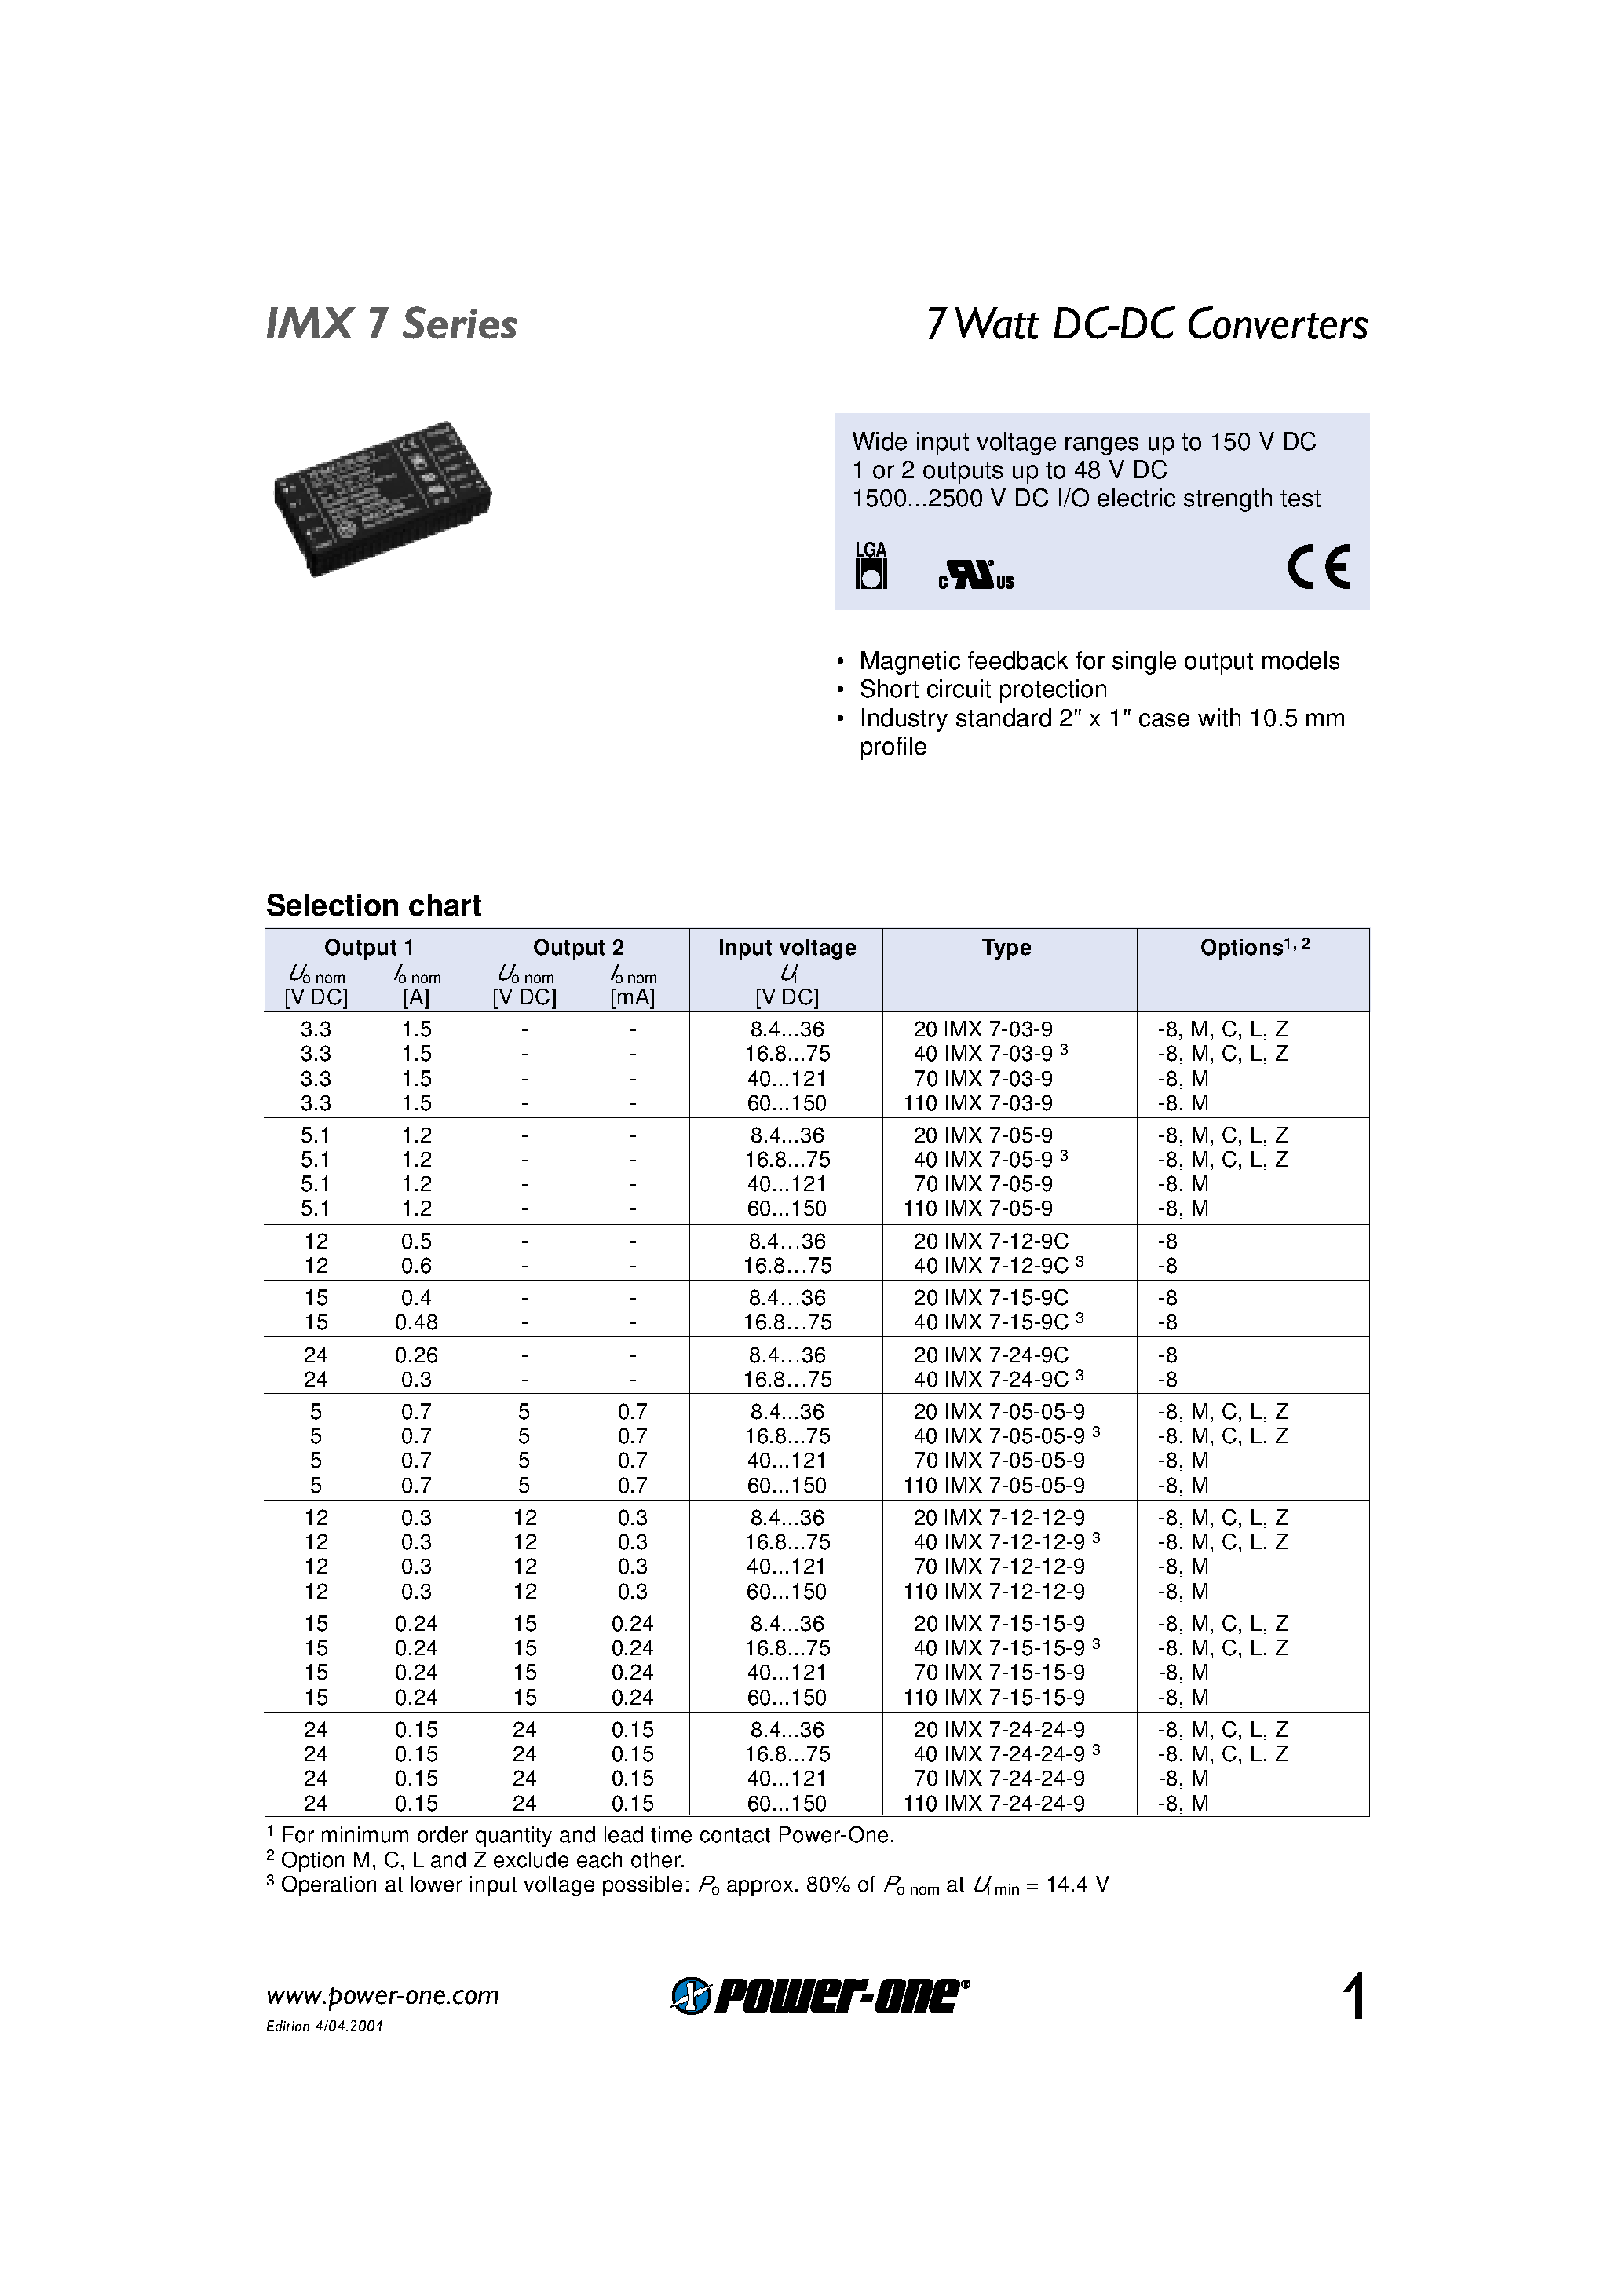 Datasheet 40IMX7-05-9 - 7 Watt DC-DC Converters page 1